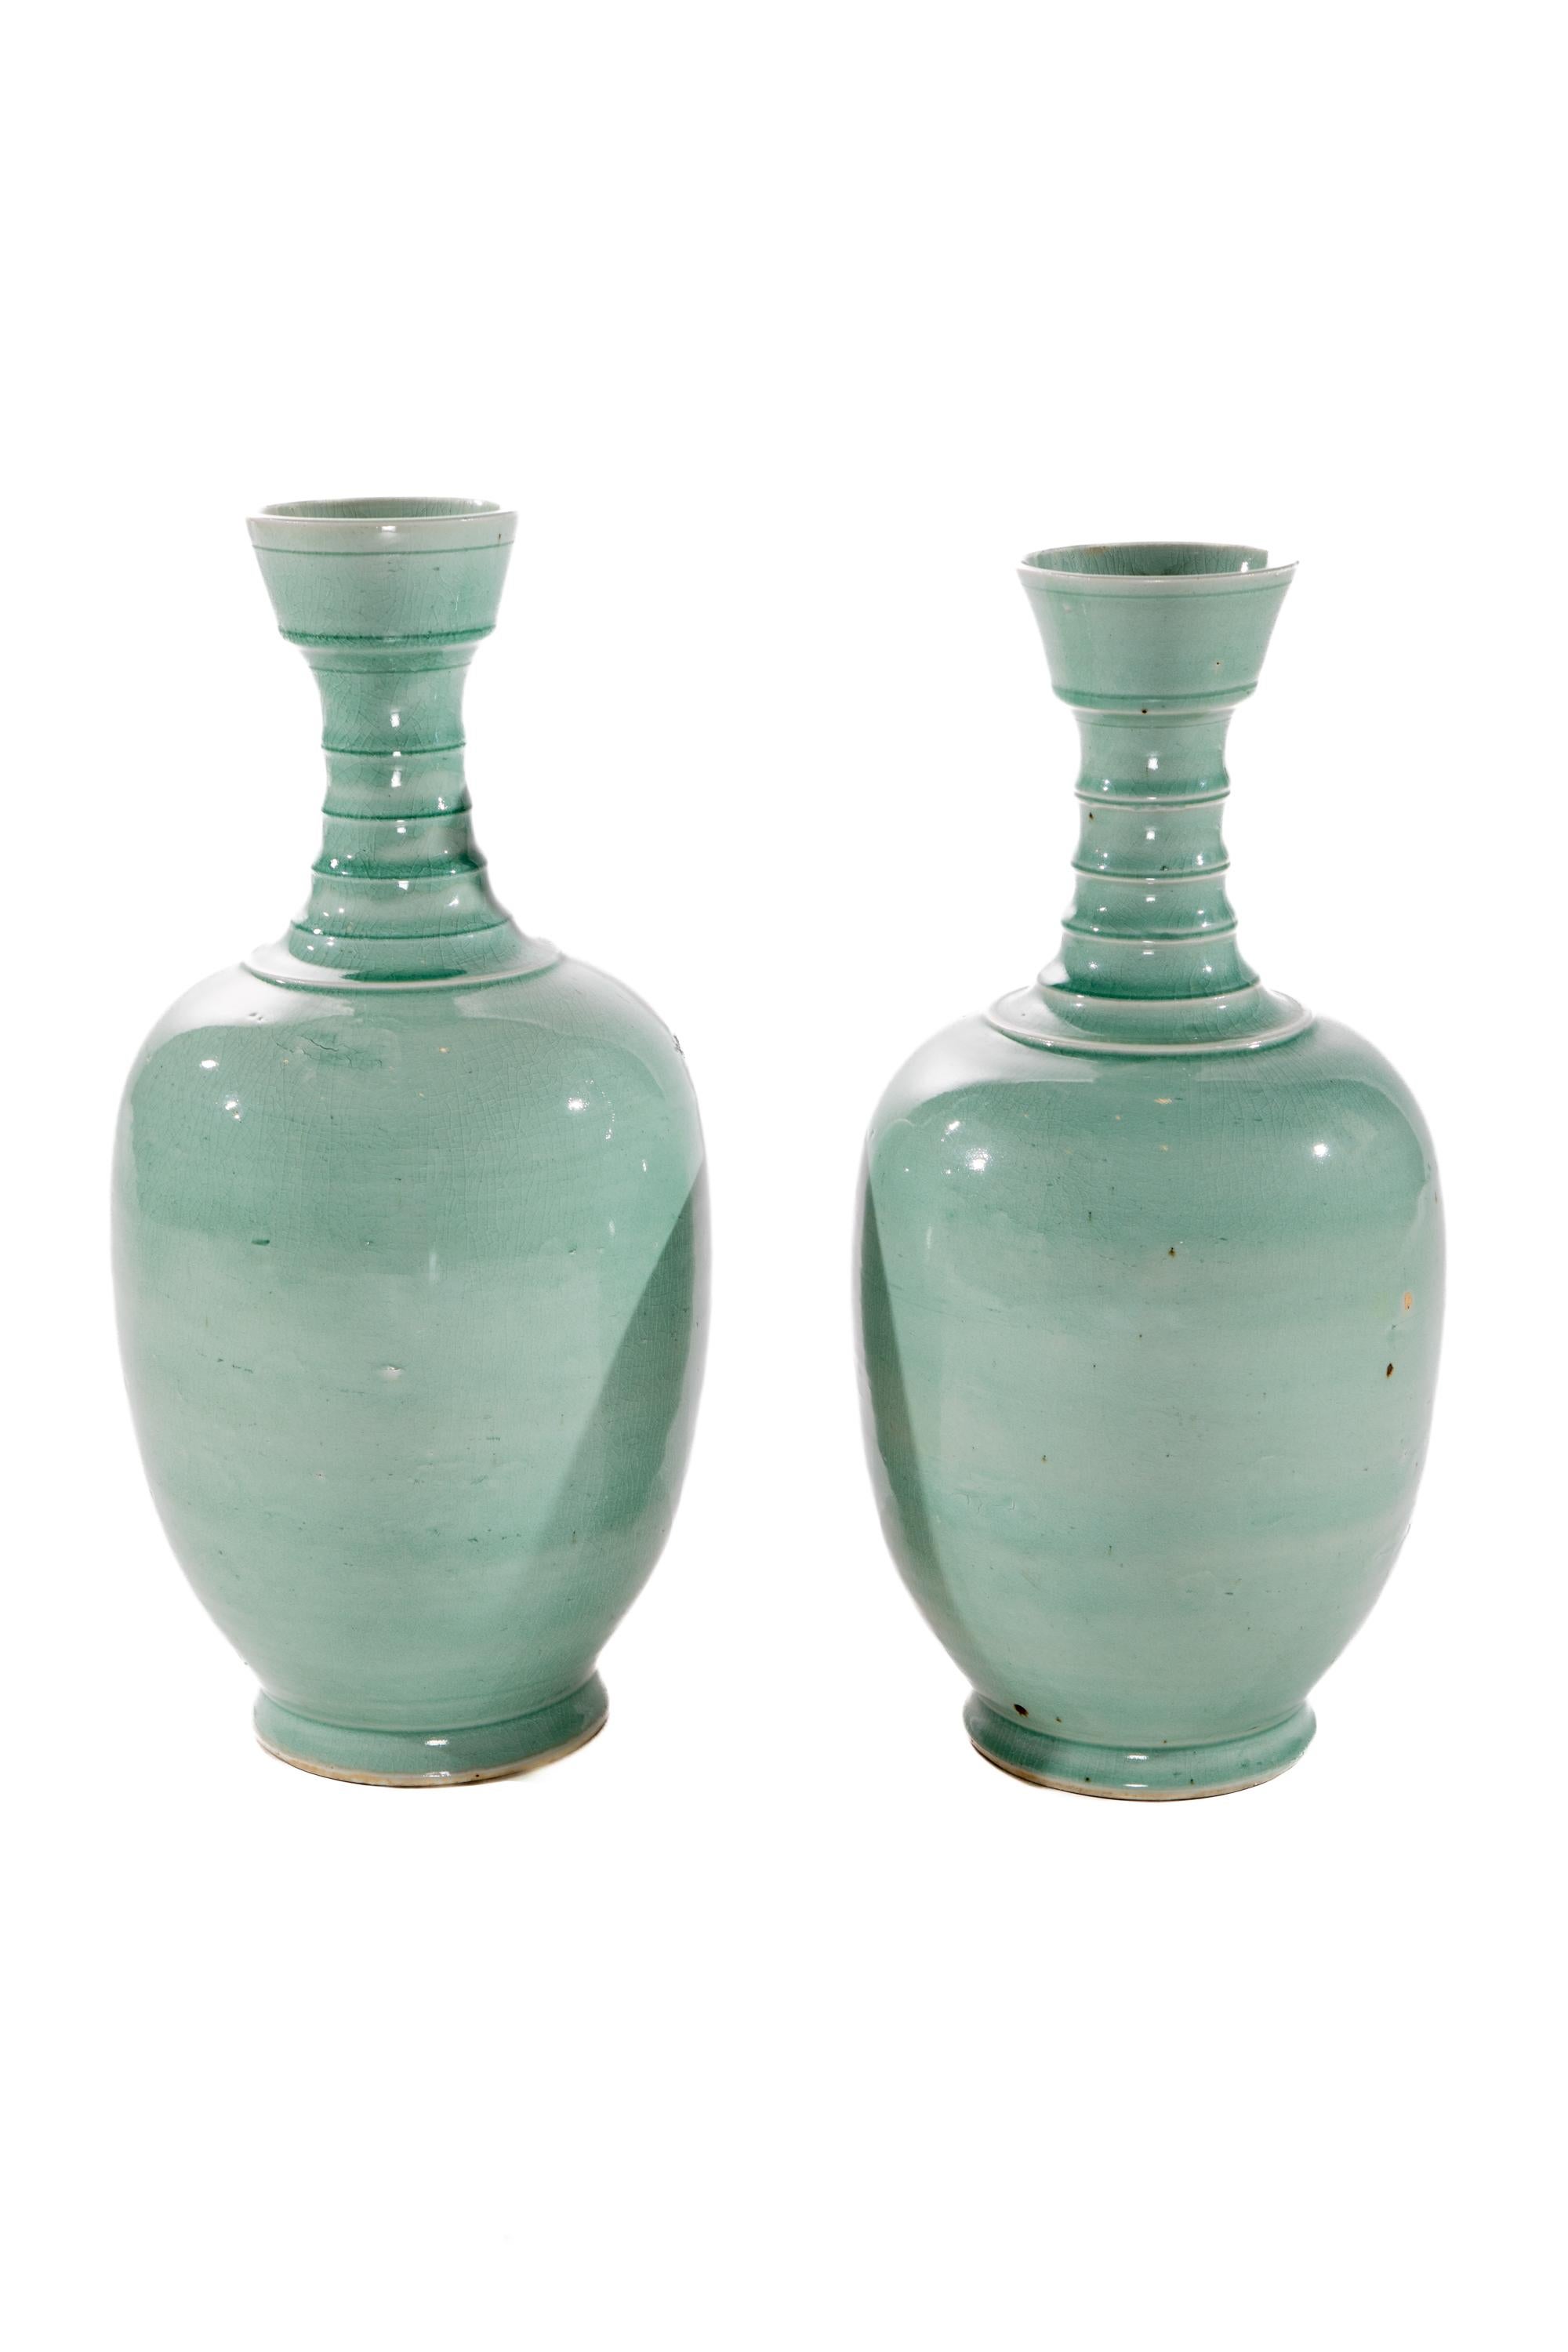 Pair of Chinese Celedon vases with ringed turned necks